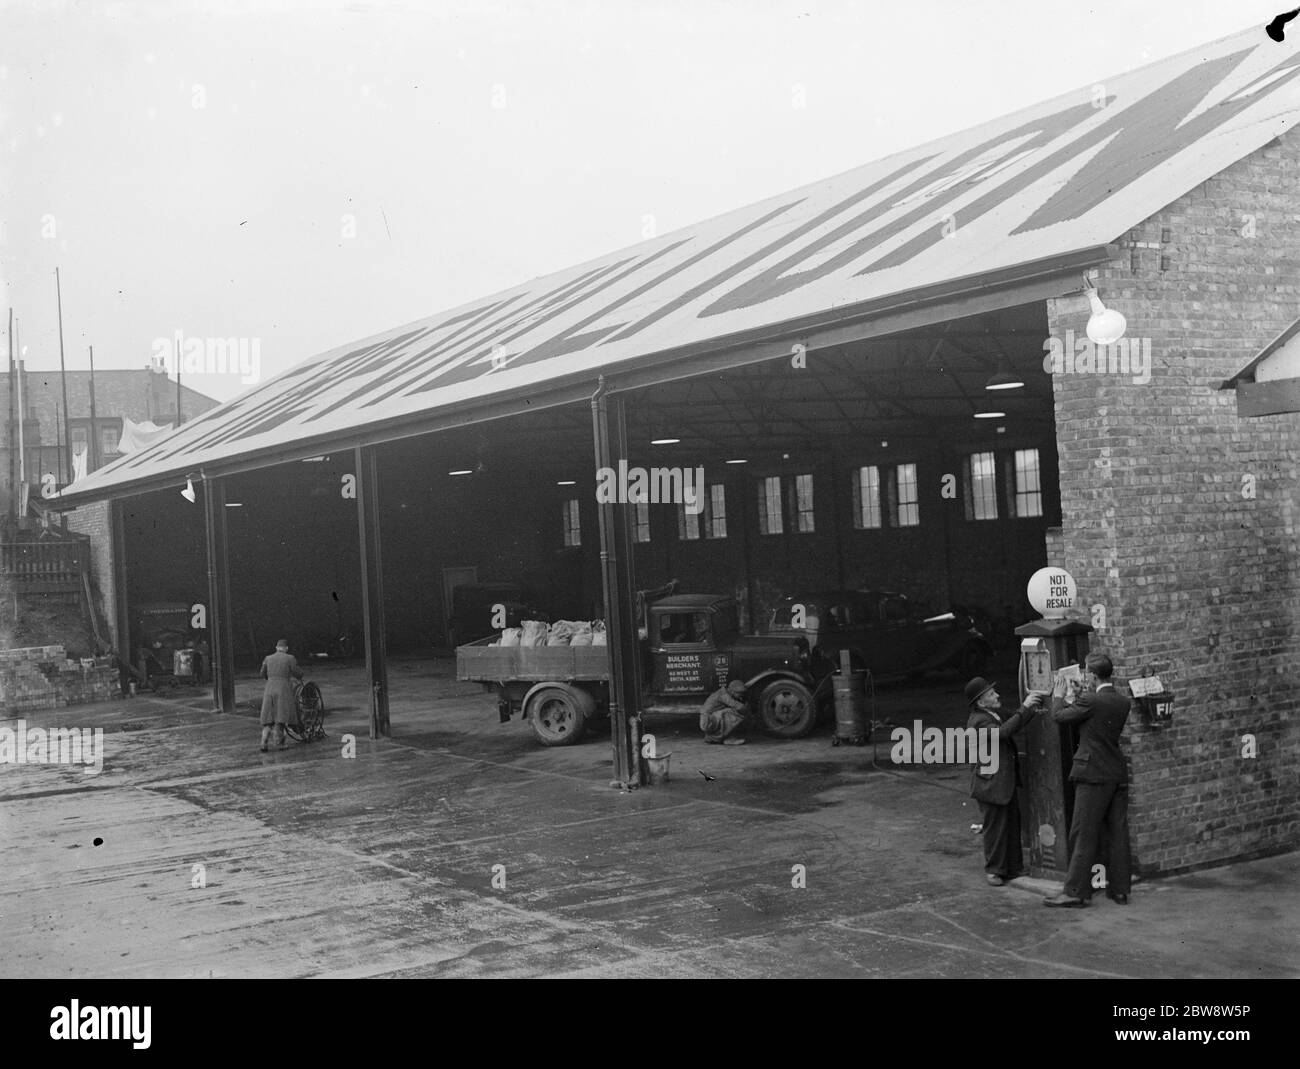 The Trevillion garages inn Erith , Kent . 1936 Stock Photo